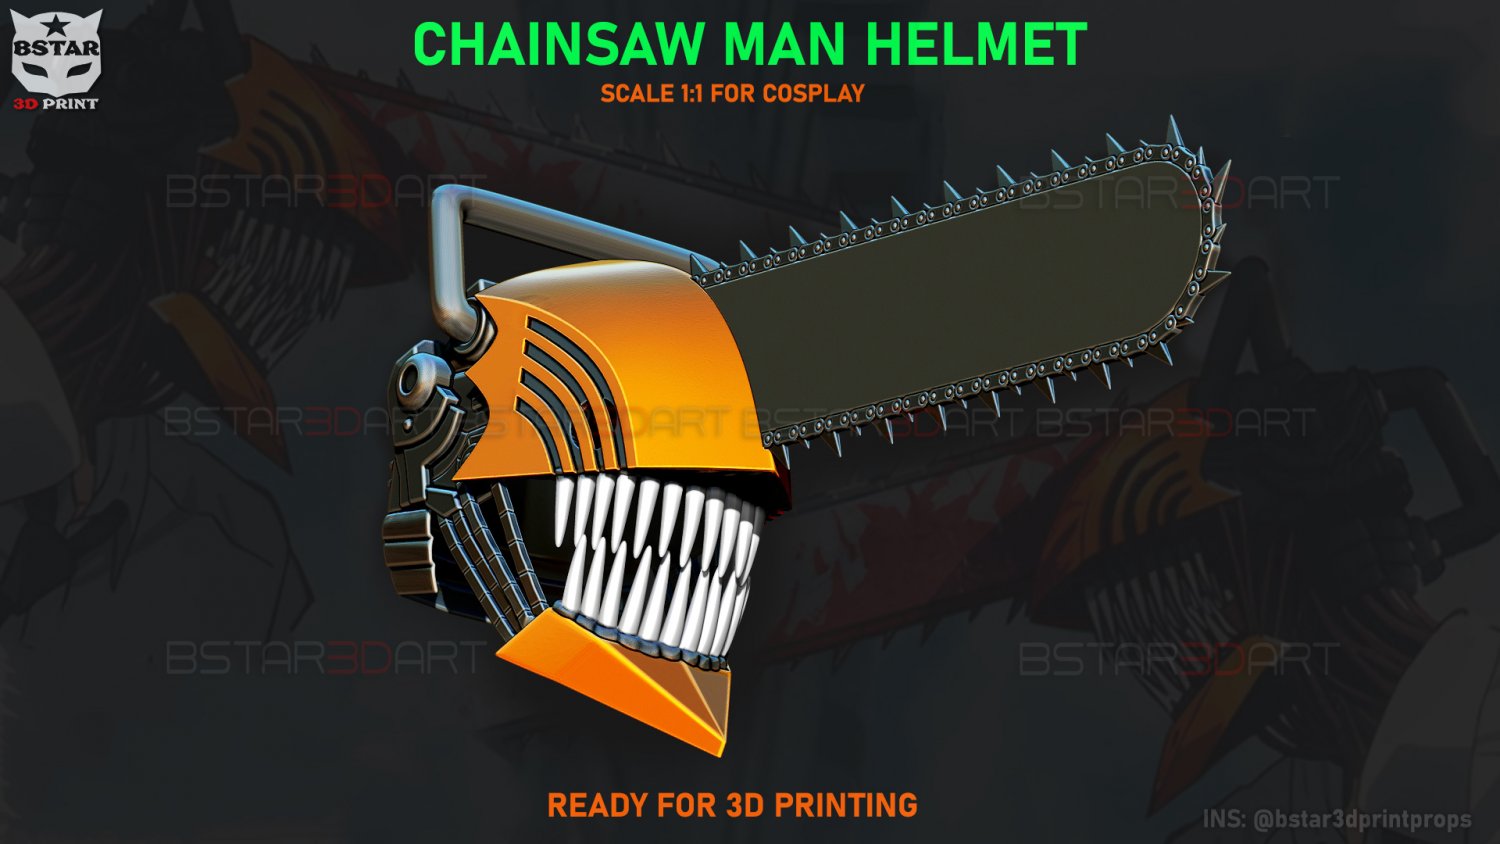 Chainsaw man helmet 3d printable model 3D model 3D printable